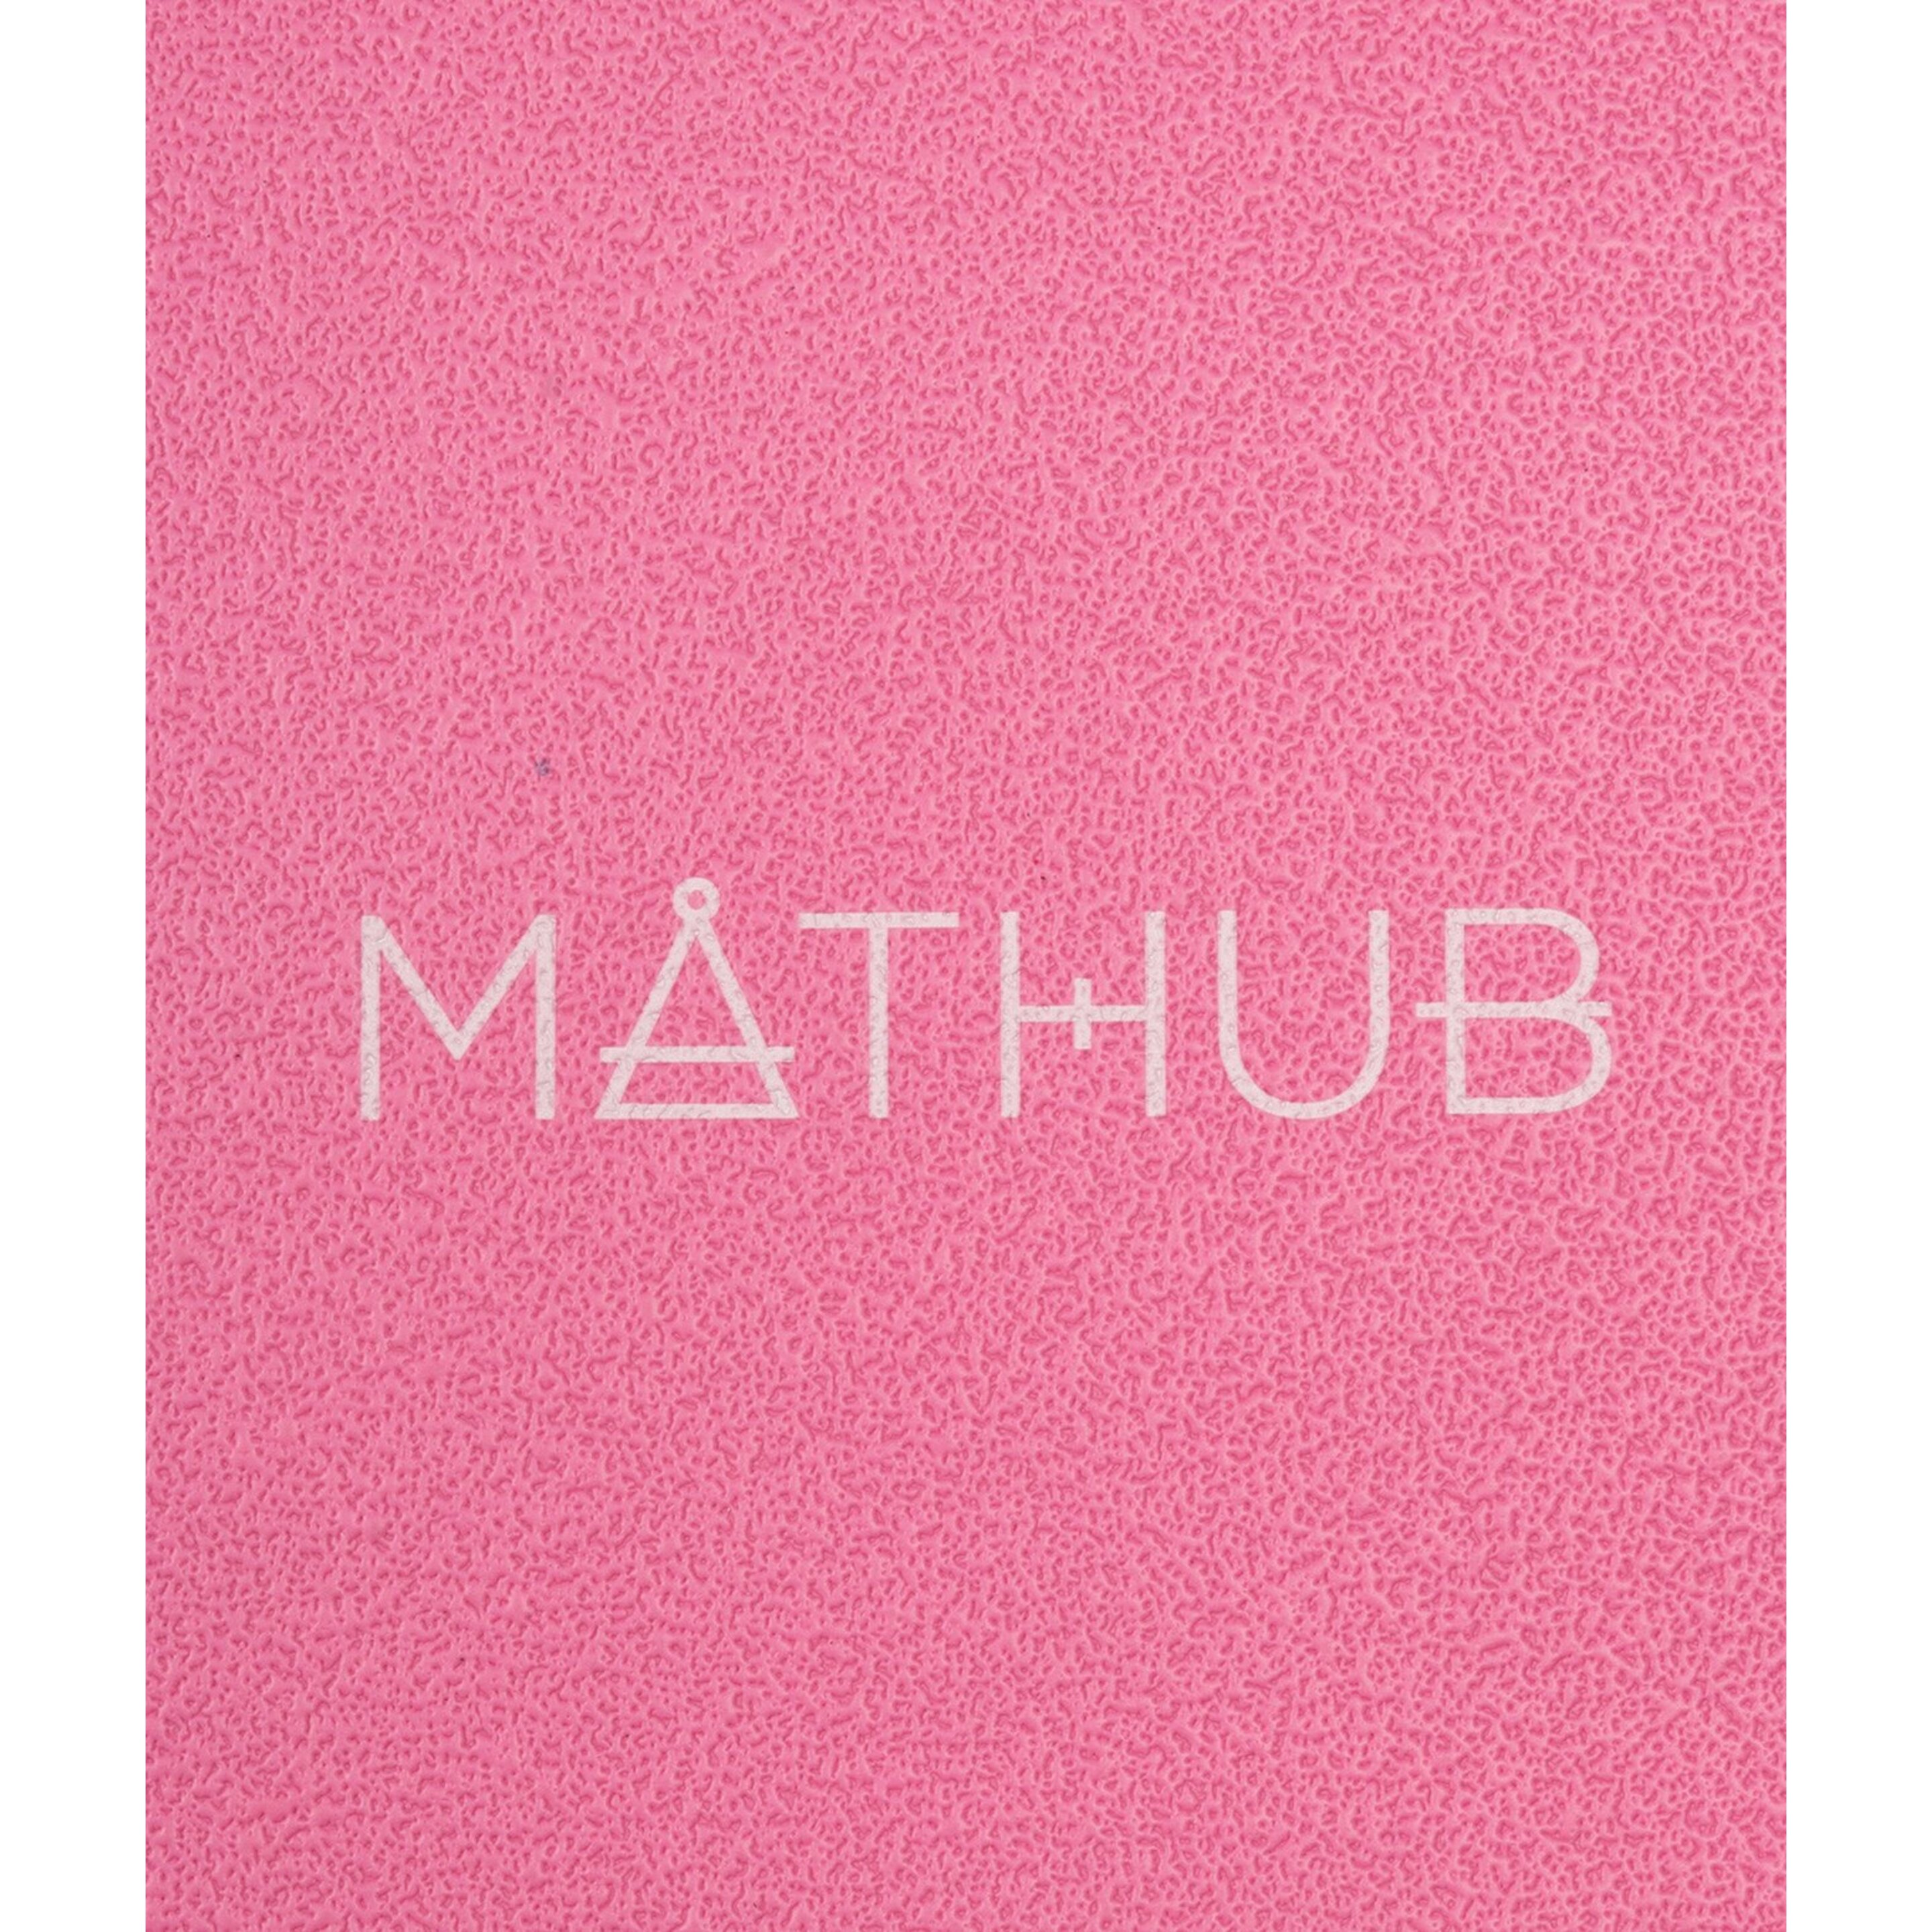 Mat Mathub Adventure